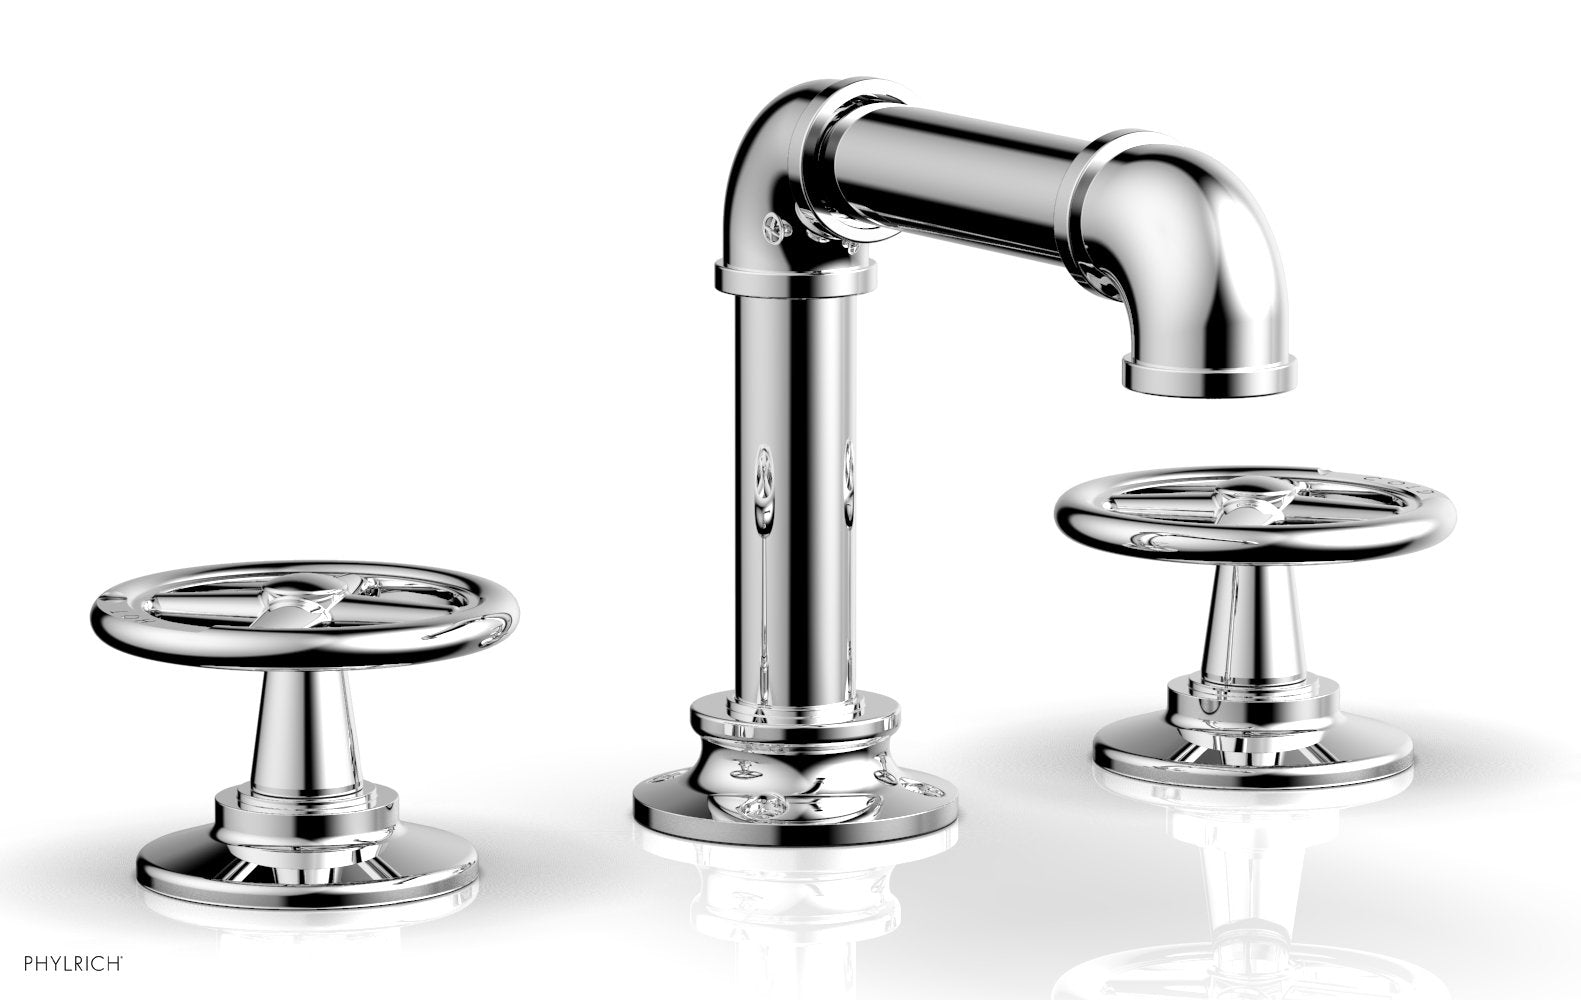 polished chrome faucet